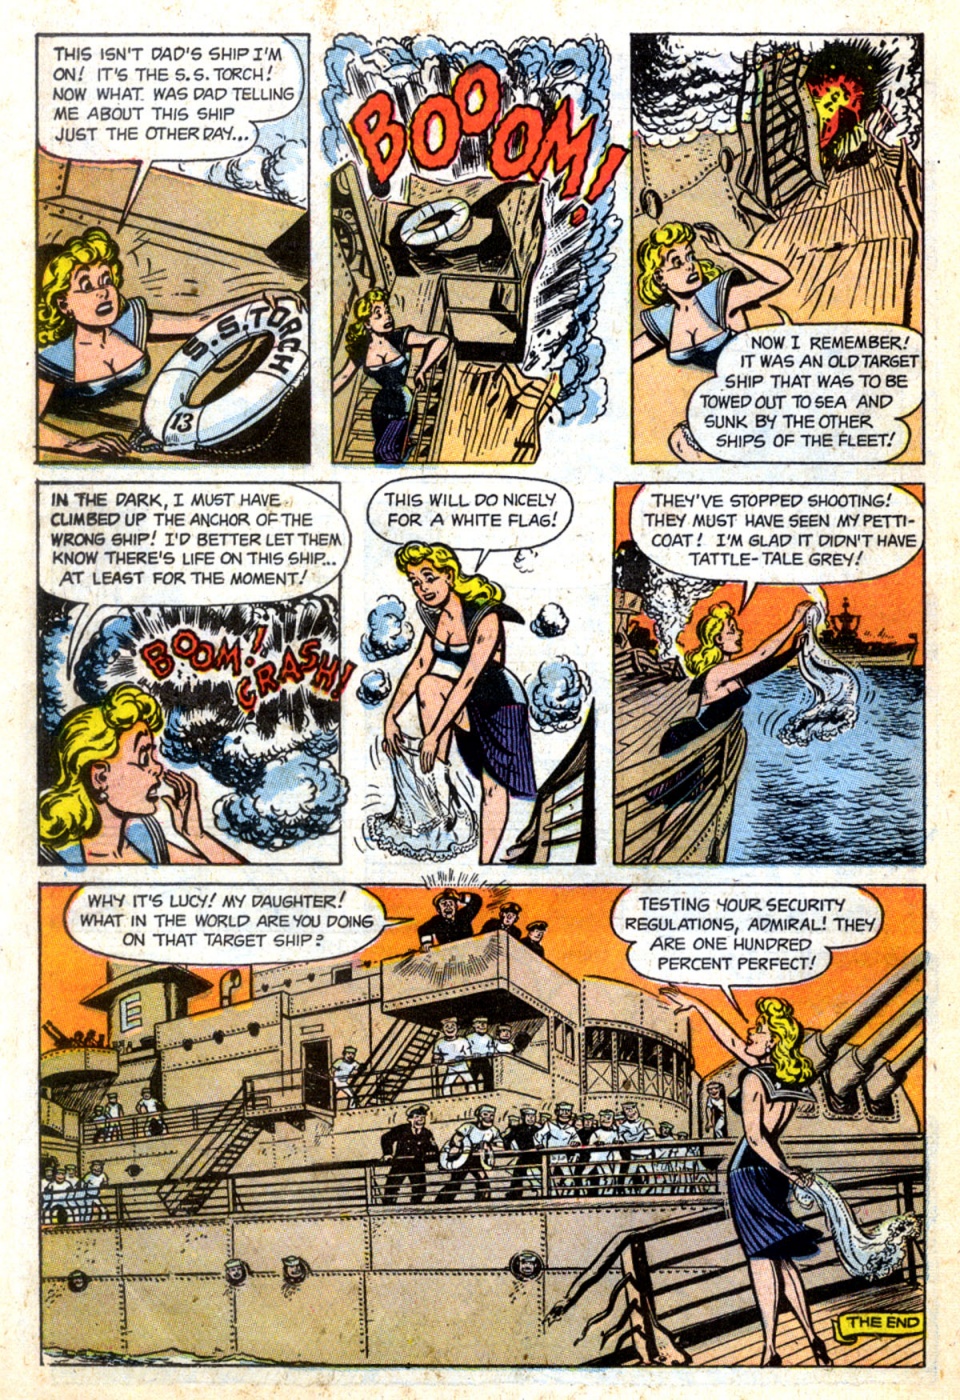 Anchors the Salt Water Daffy - Comics (c) (26)